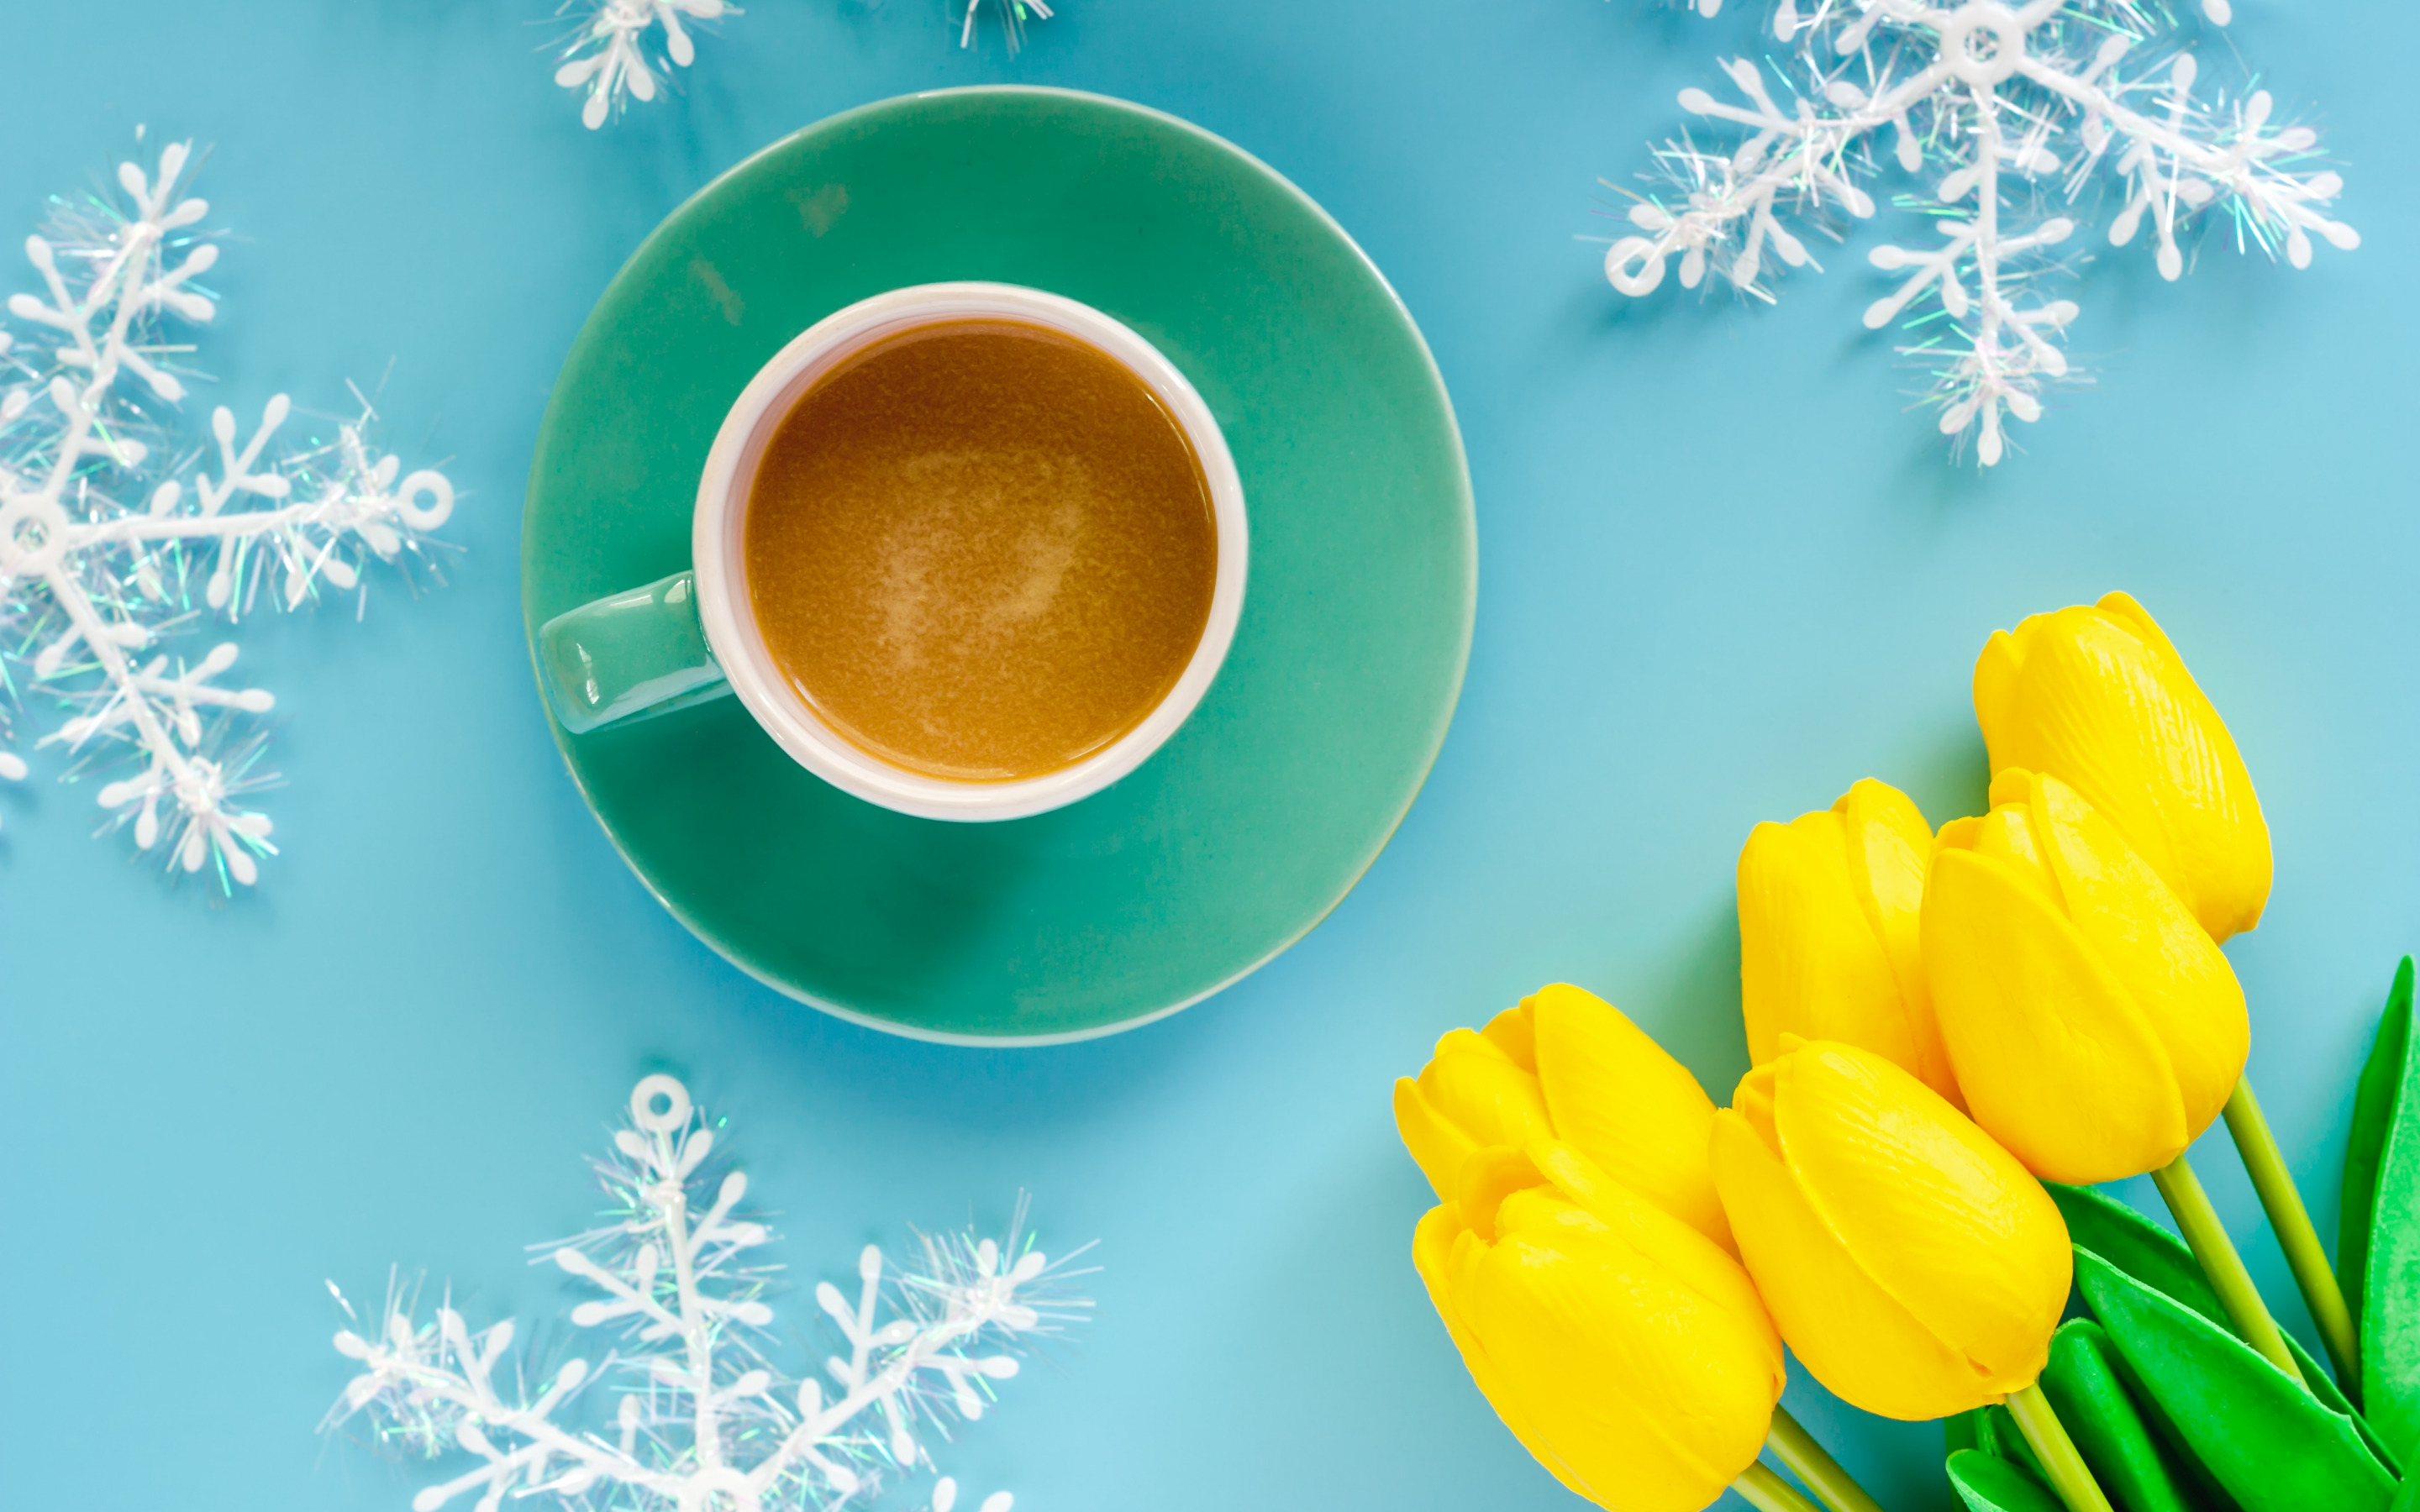 cup of coffee, snowflakes, yellow tulips, spring flowers, blue background, чашка кофе, снежинки, желтые тюльпаны, весенние цветы, голубой фон